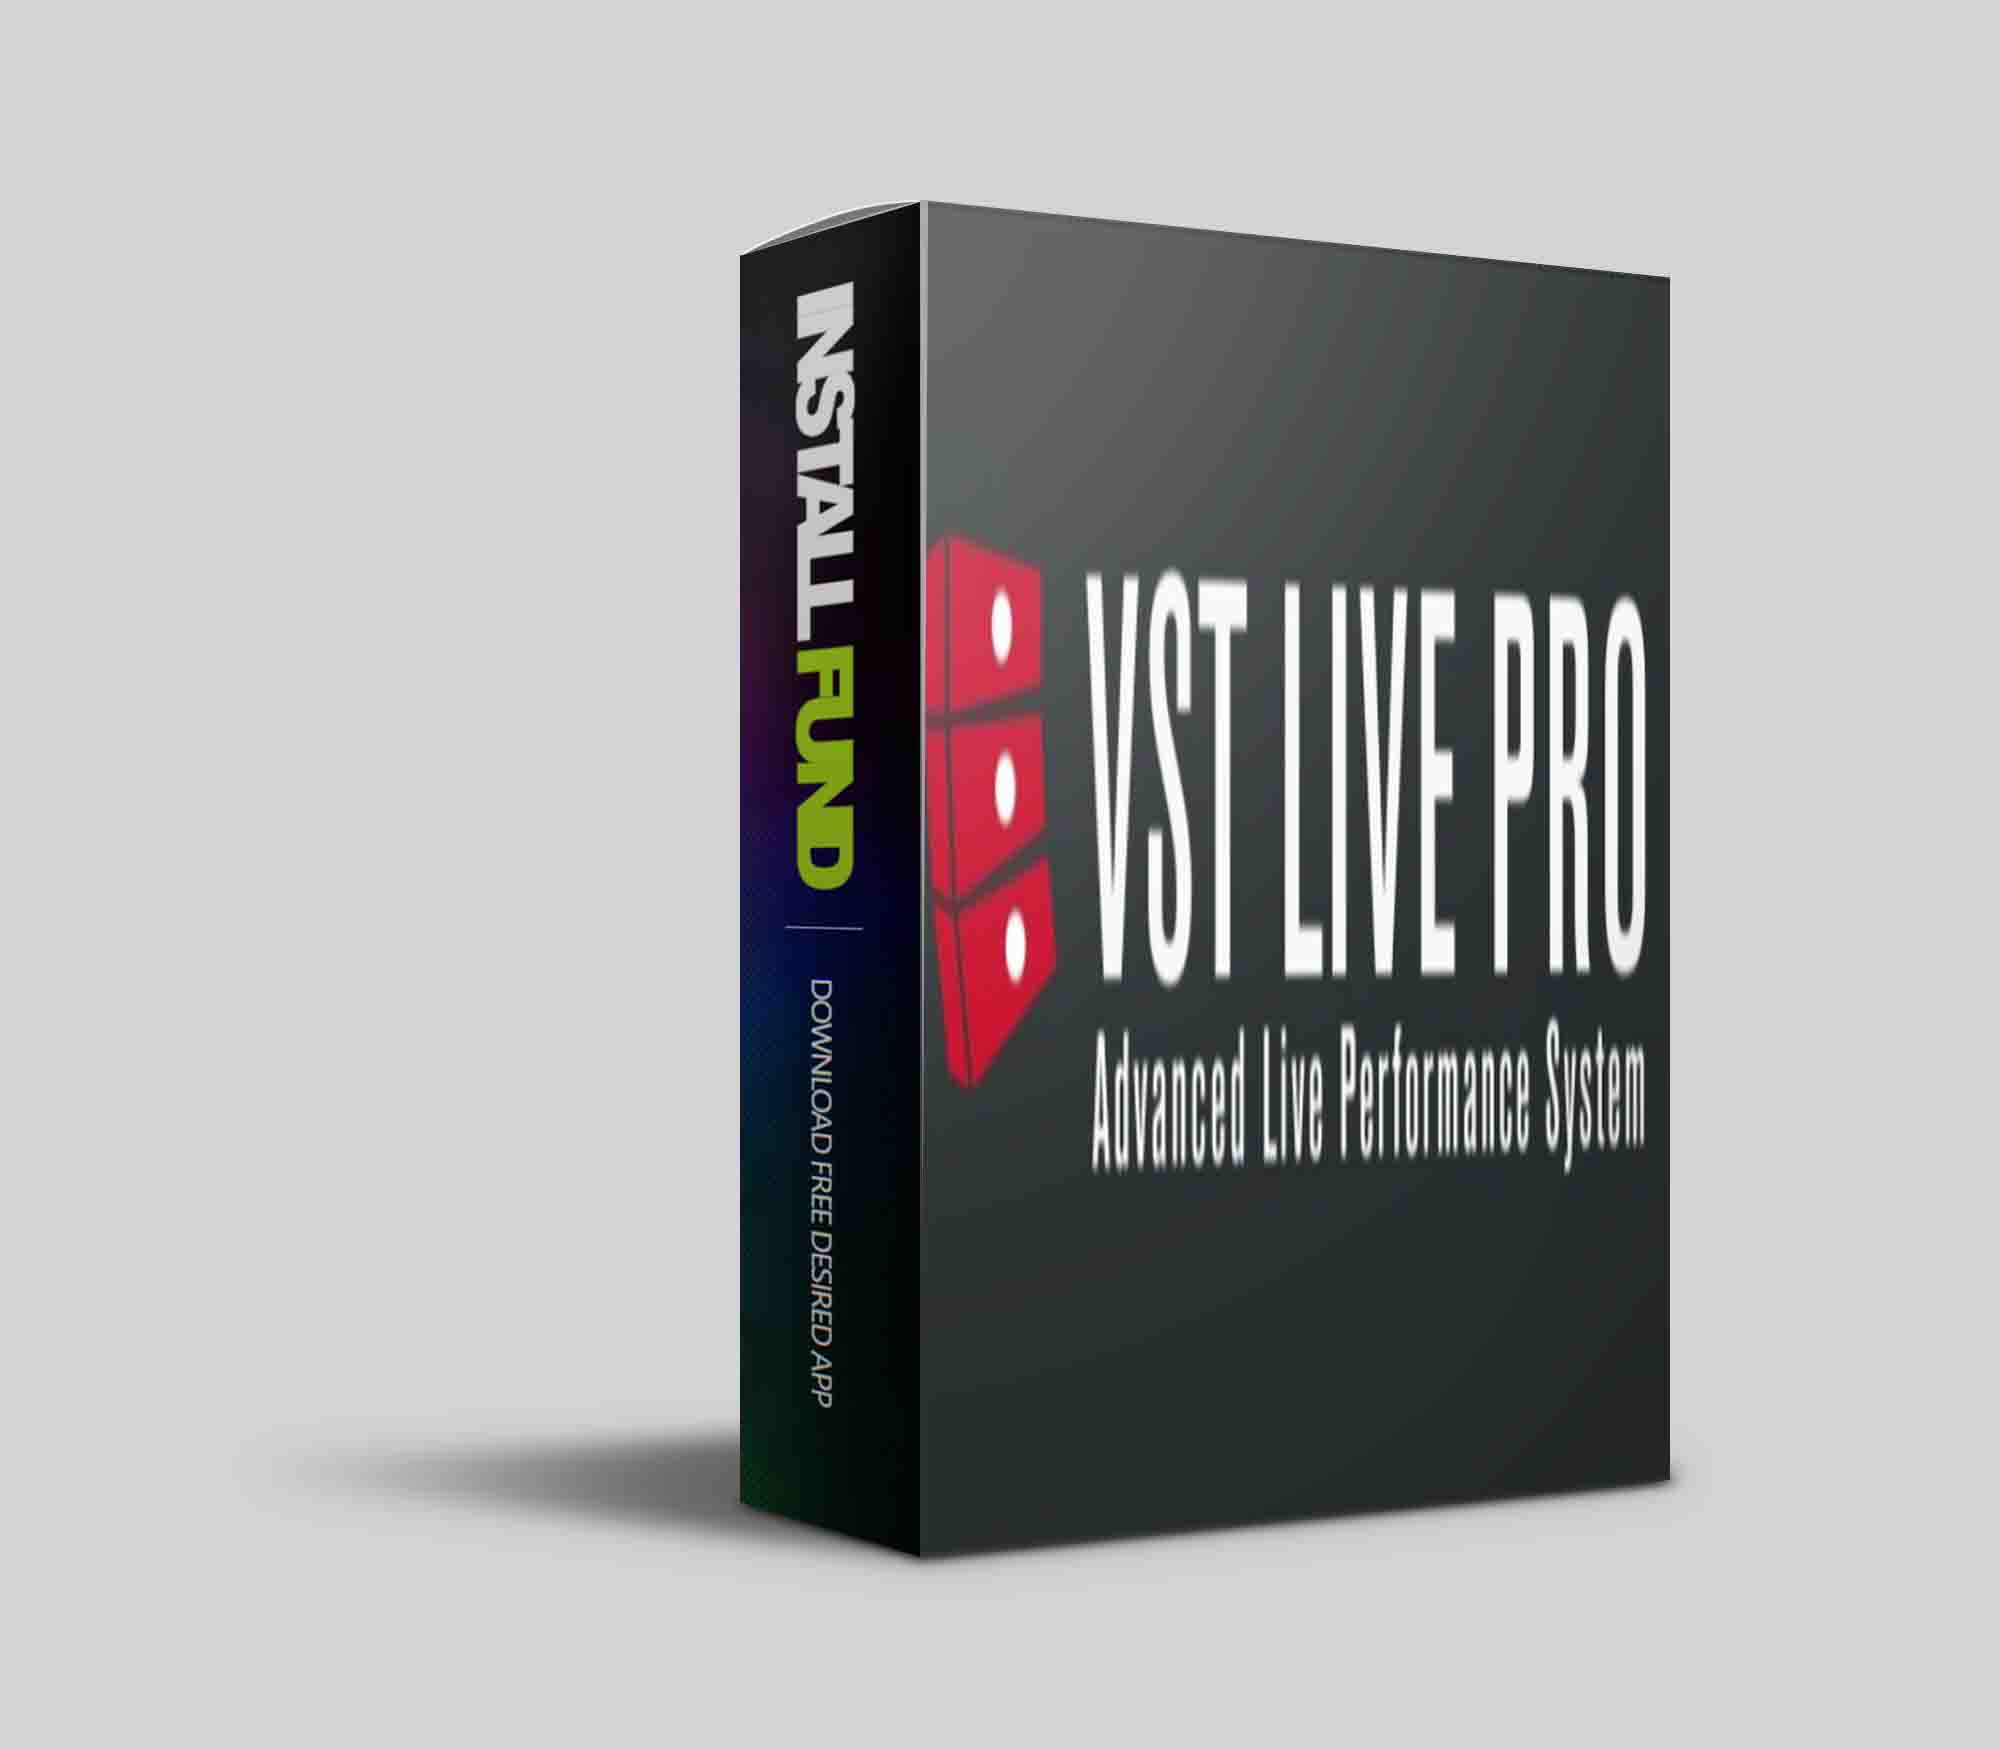 download the last version for ipod Steinberg VST Live Pro 1.2